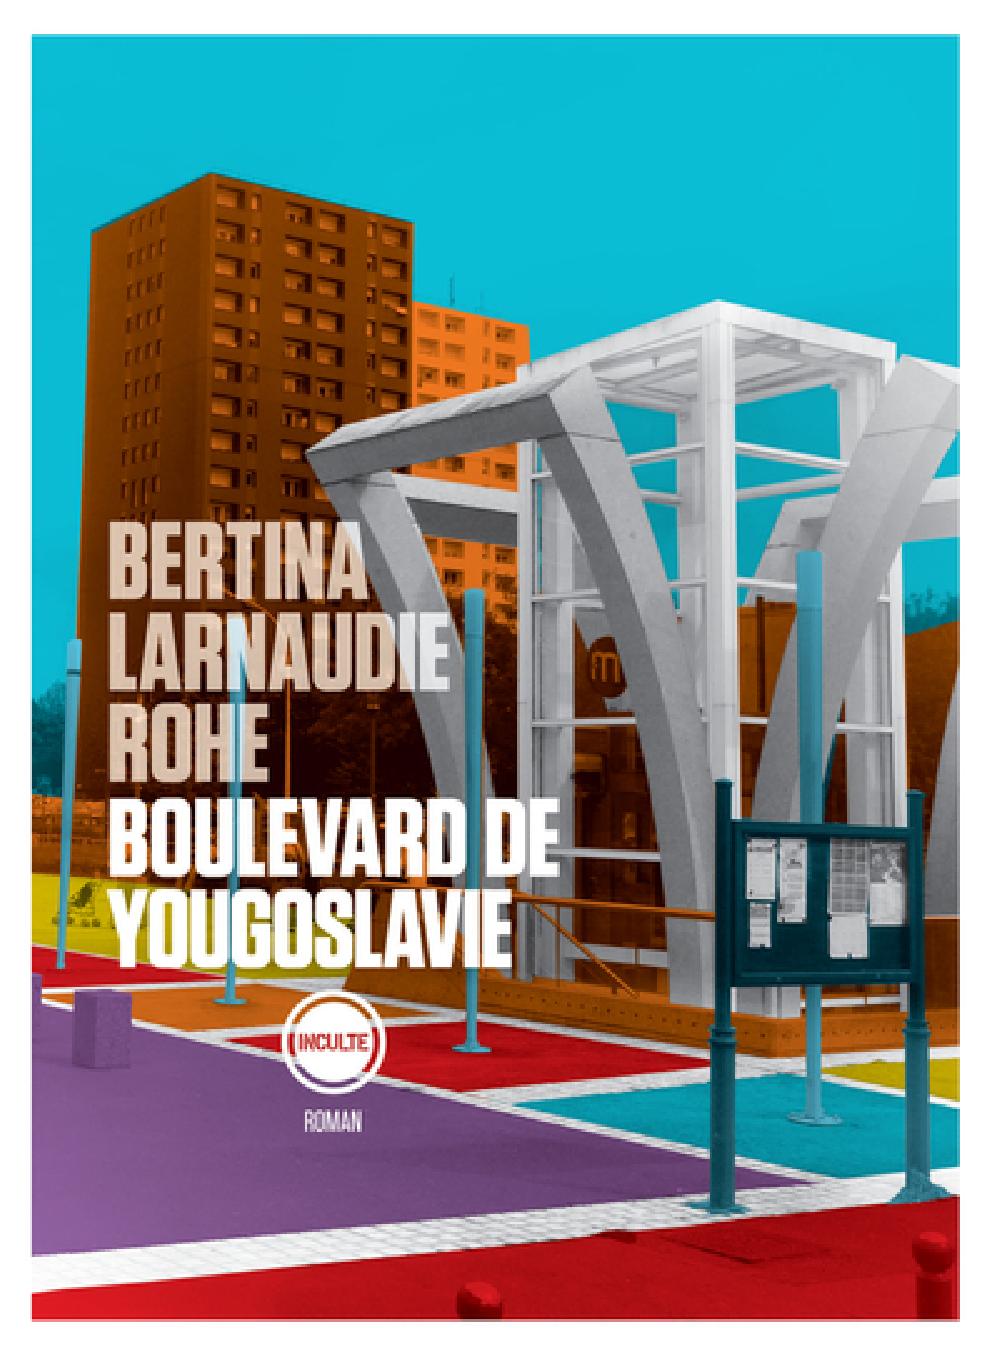 Boulevard de Yougoslavie - Une consultation